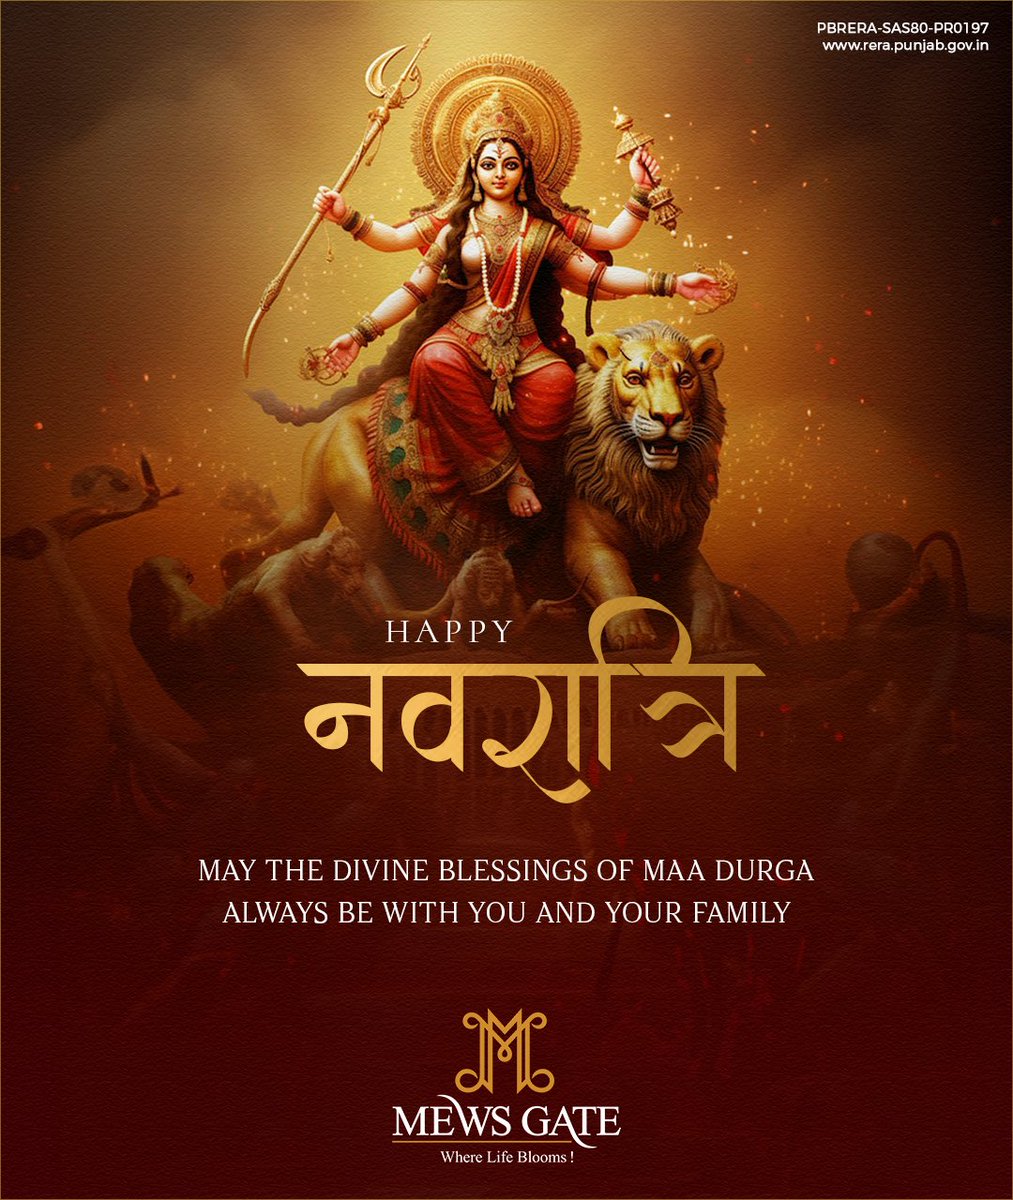 May the divine blessings of Goddess Durga enrich your life with happiness and fulfilment. Shubh Navratri #MewsGate #Navratri2024 #ChaitraNavratri #DivineBlessings #JaiMataDi #MaaDurga #Devotion #Fulfilment #Happiness #Prosperity #NineNights